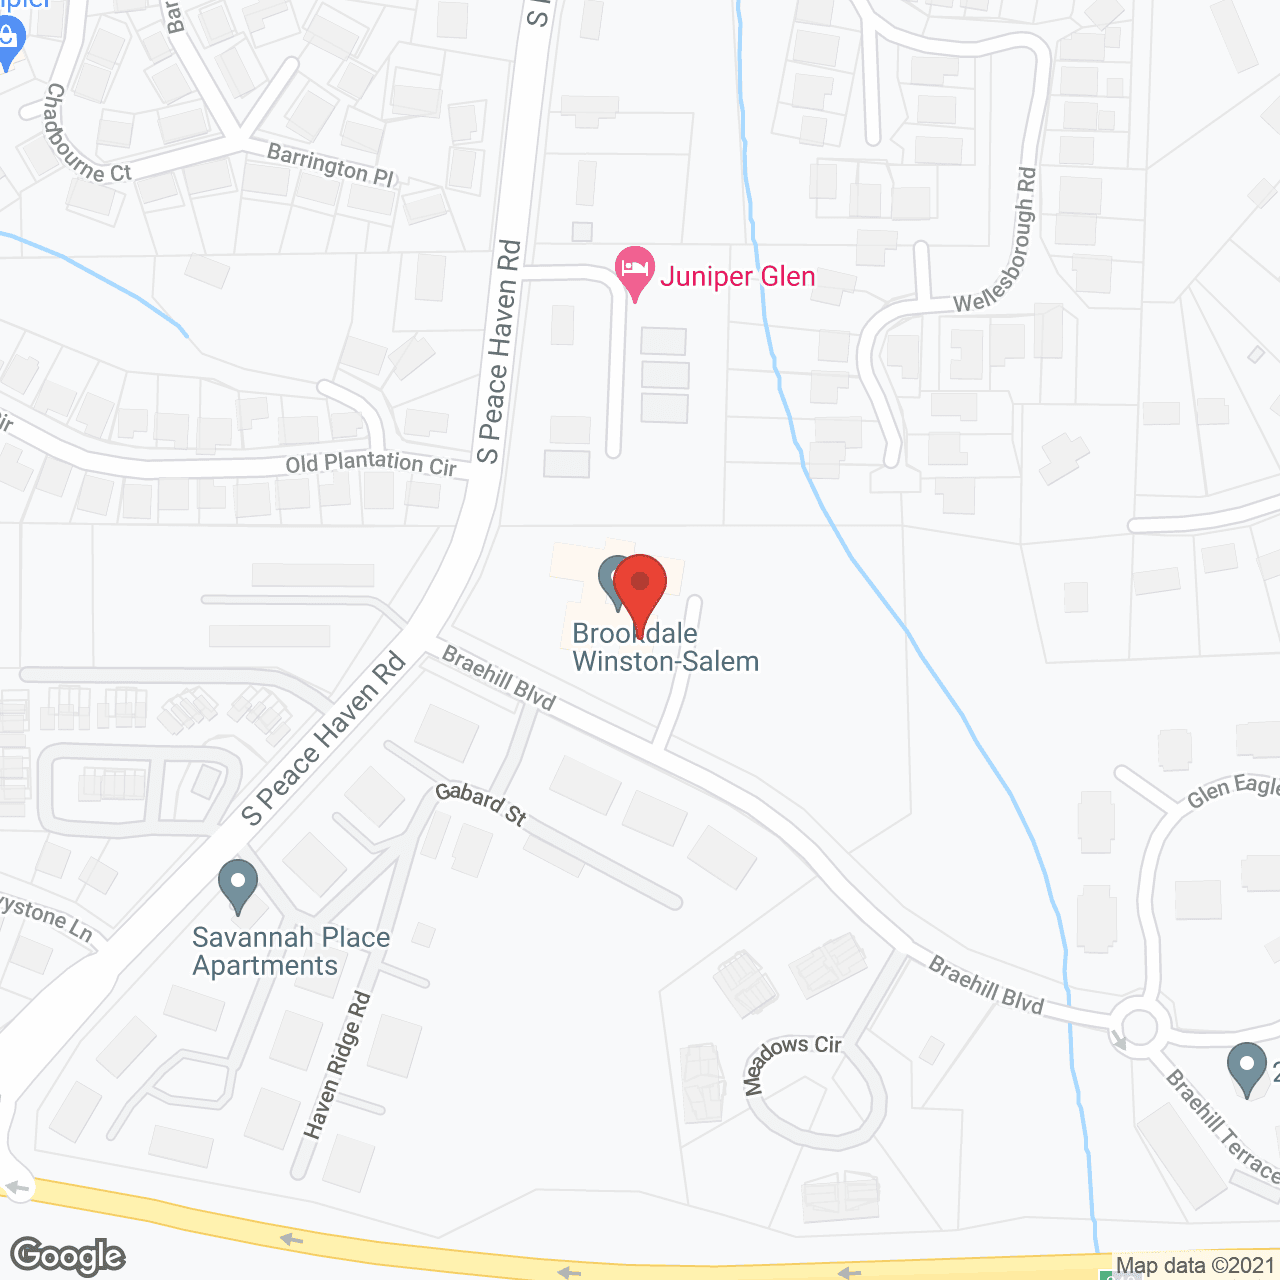 Brookdale Winston-Salem in google map